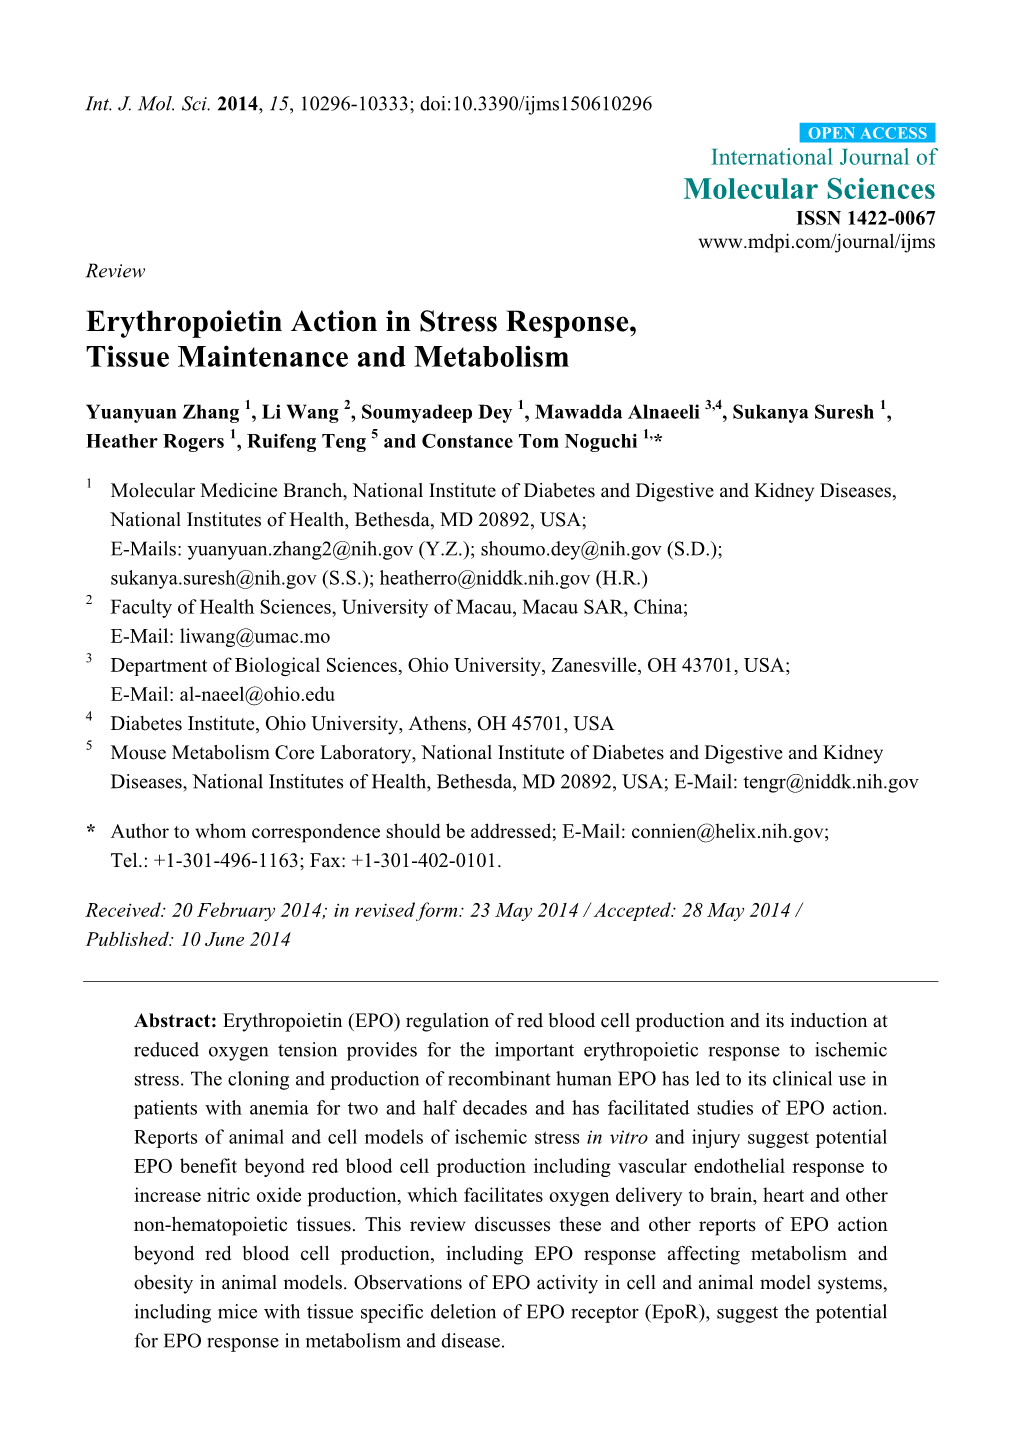 Erythropoietin Action in Stress Response, Tissue Maintenance and Metabolism